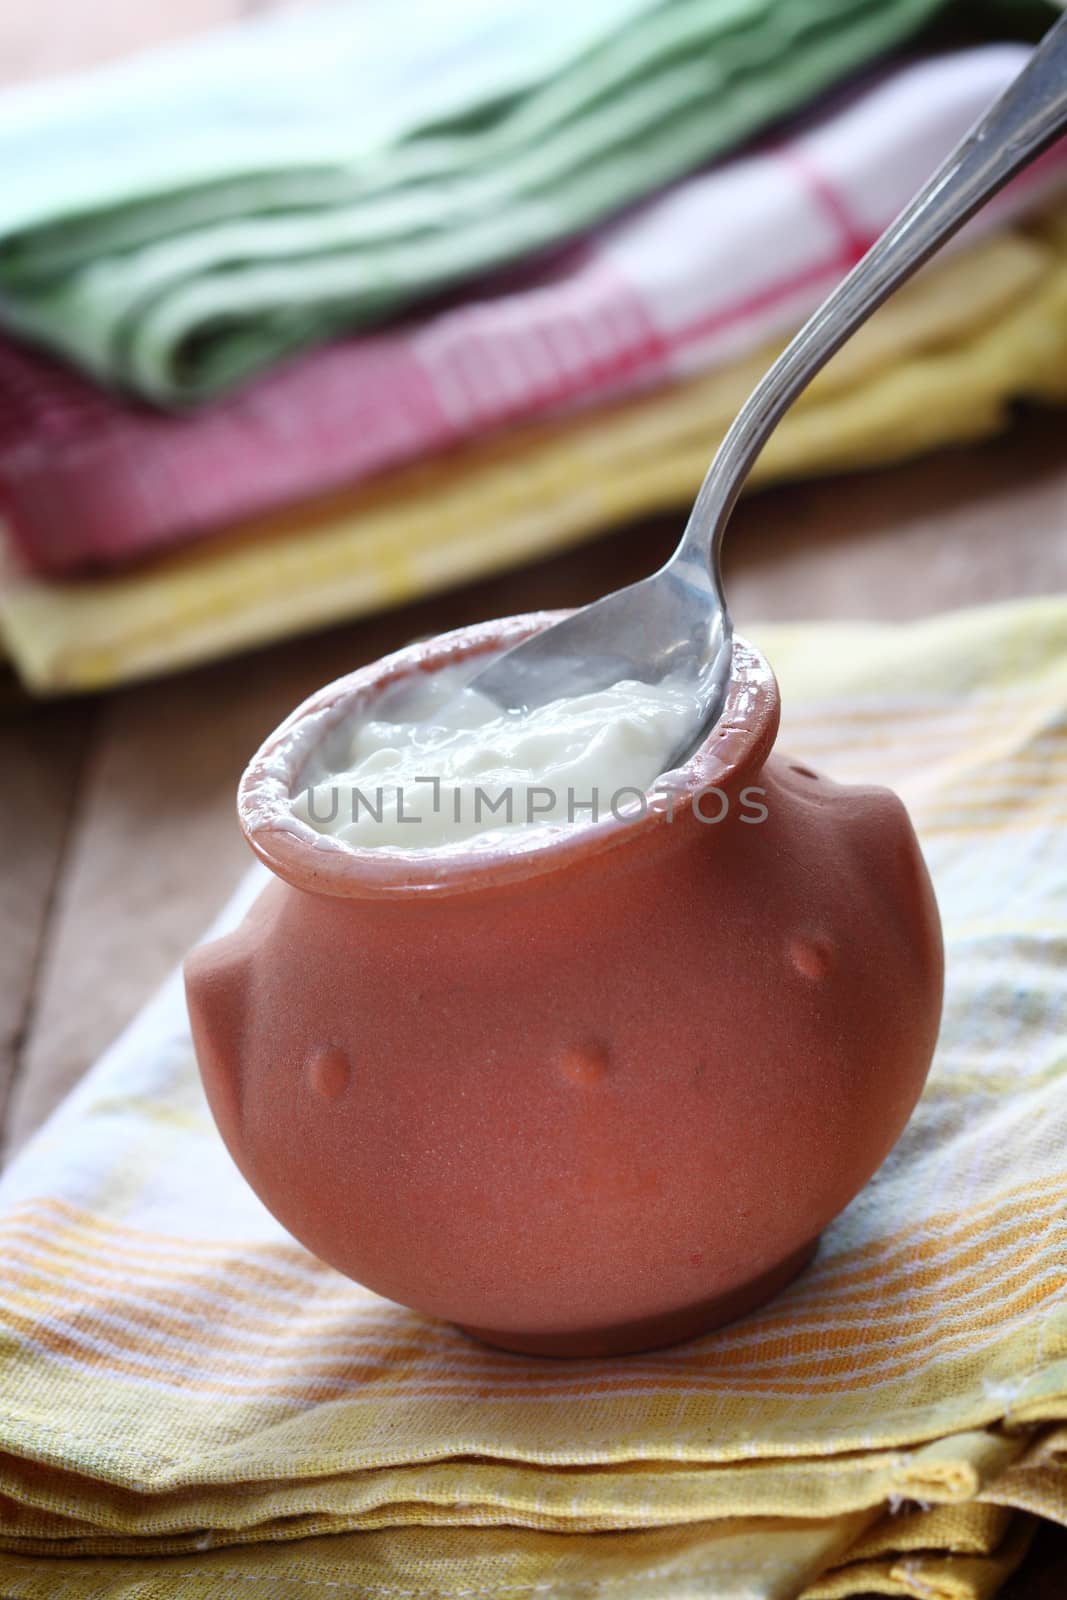 Homemade yogurt by alexkosev